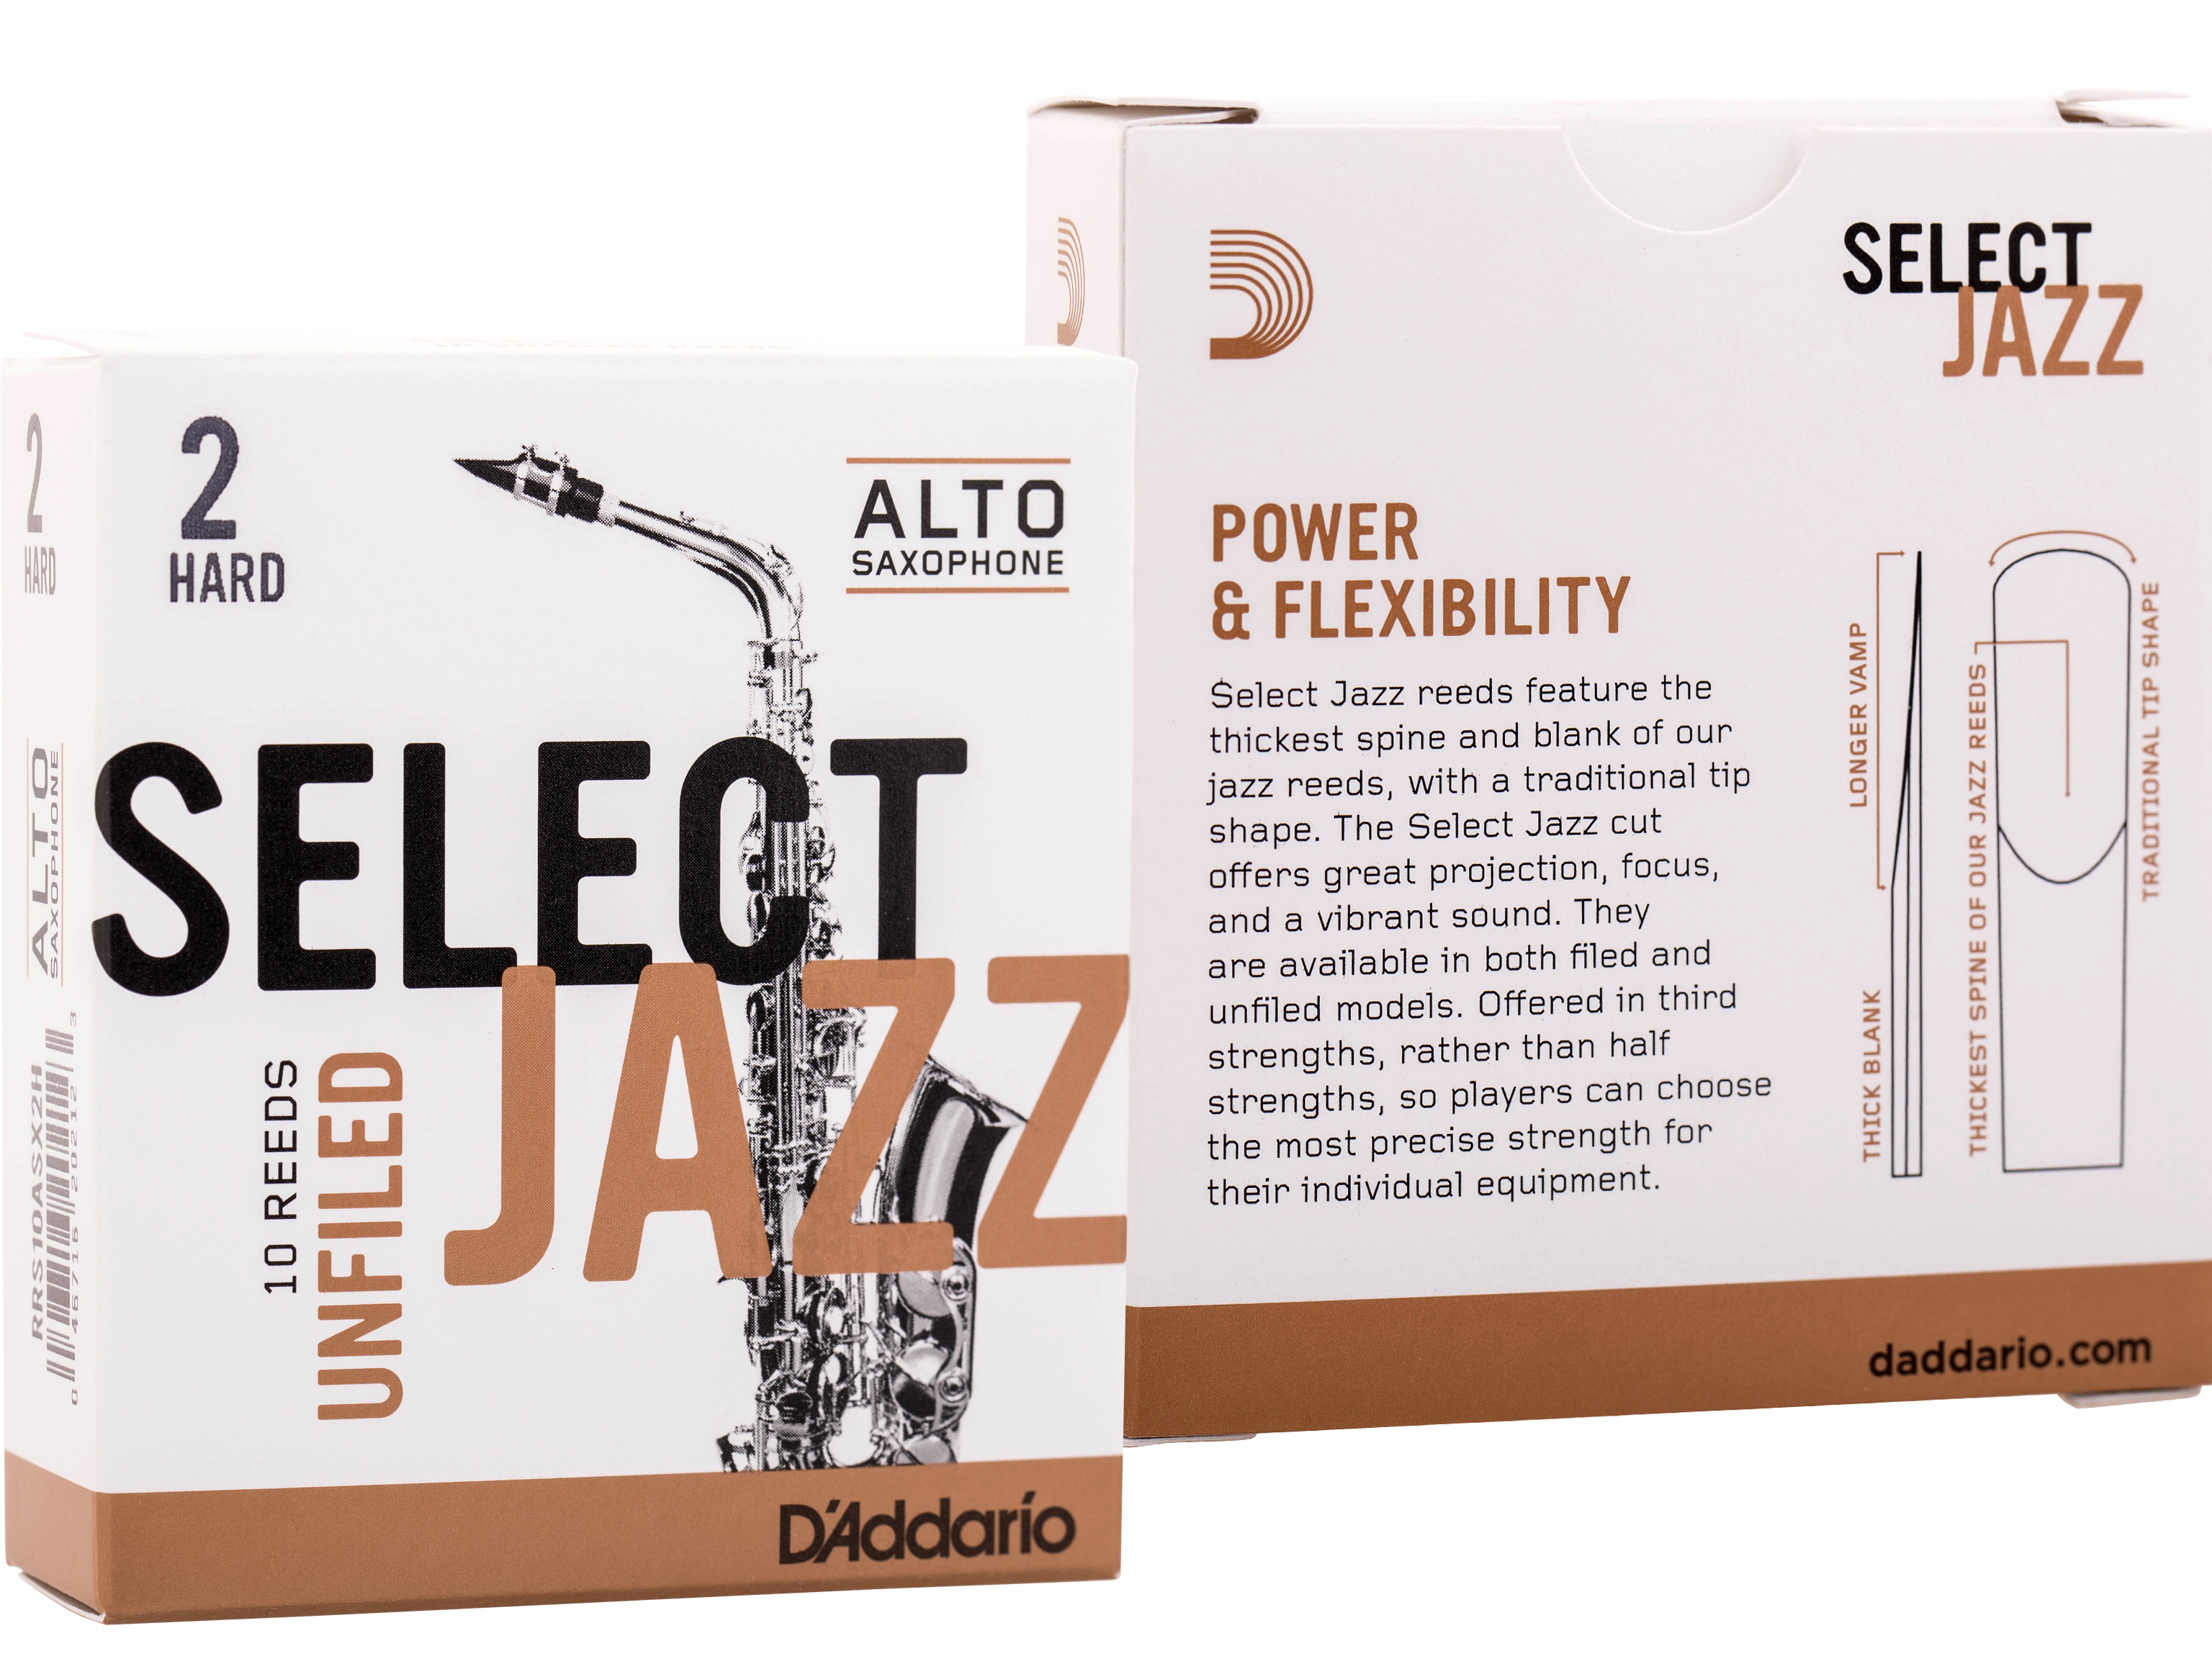 Daddario Saxophonblatt Select Jazz Alt 2H unfiled